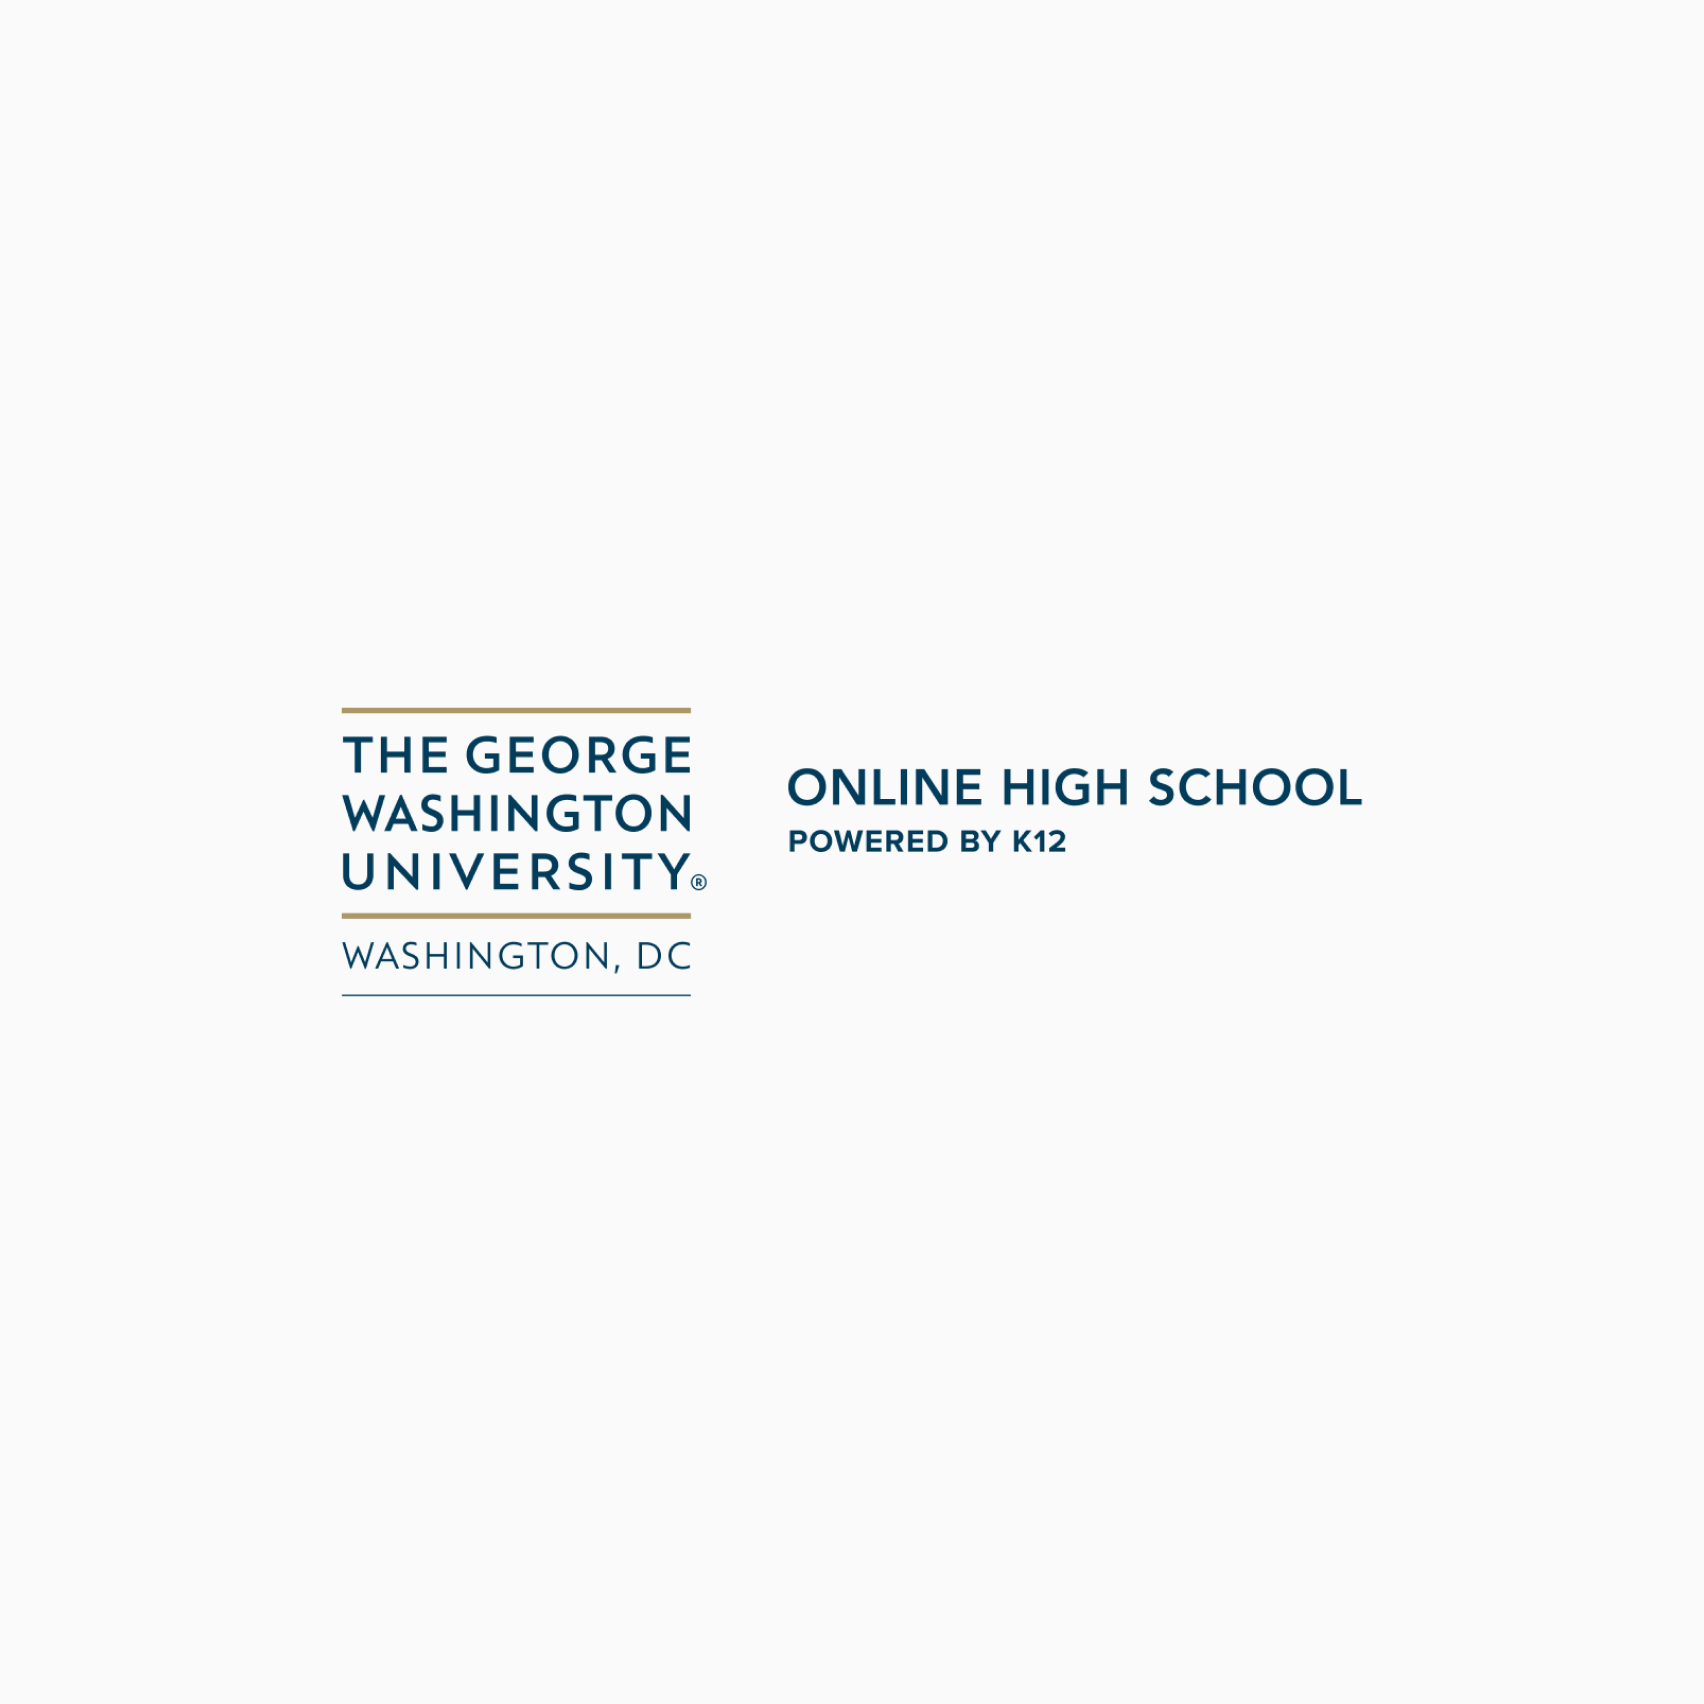 Online Private Schools image 11 (name George Washington)